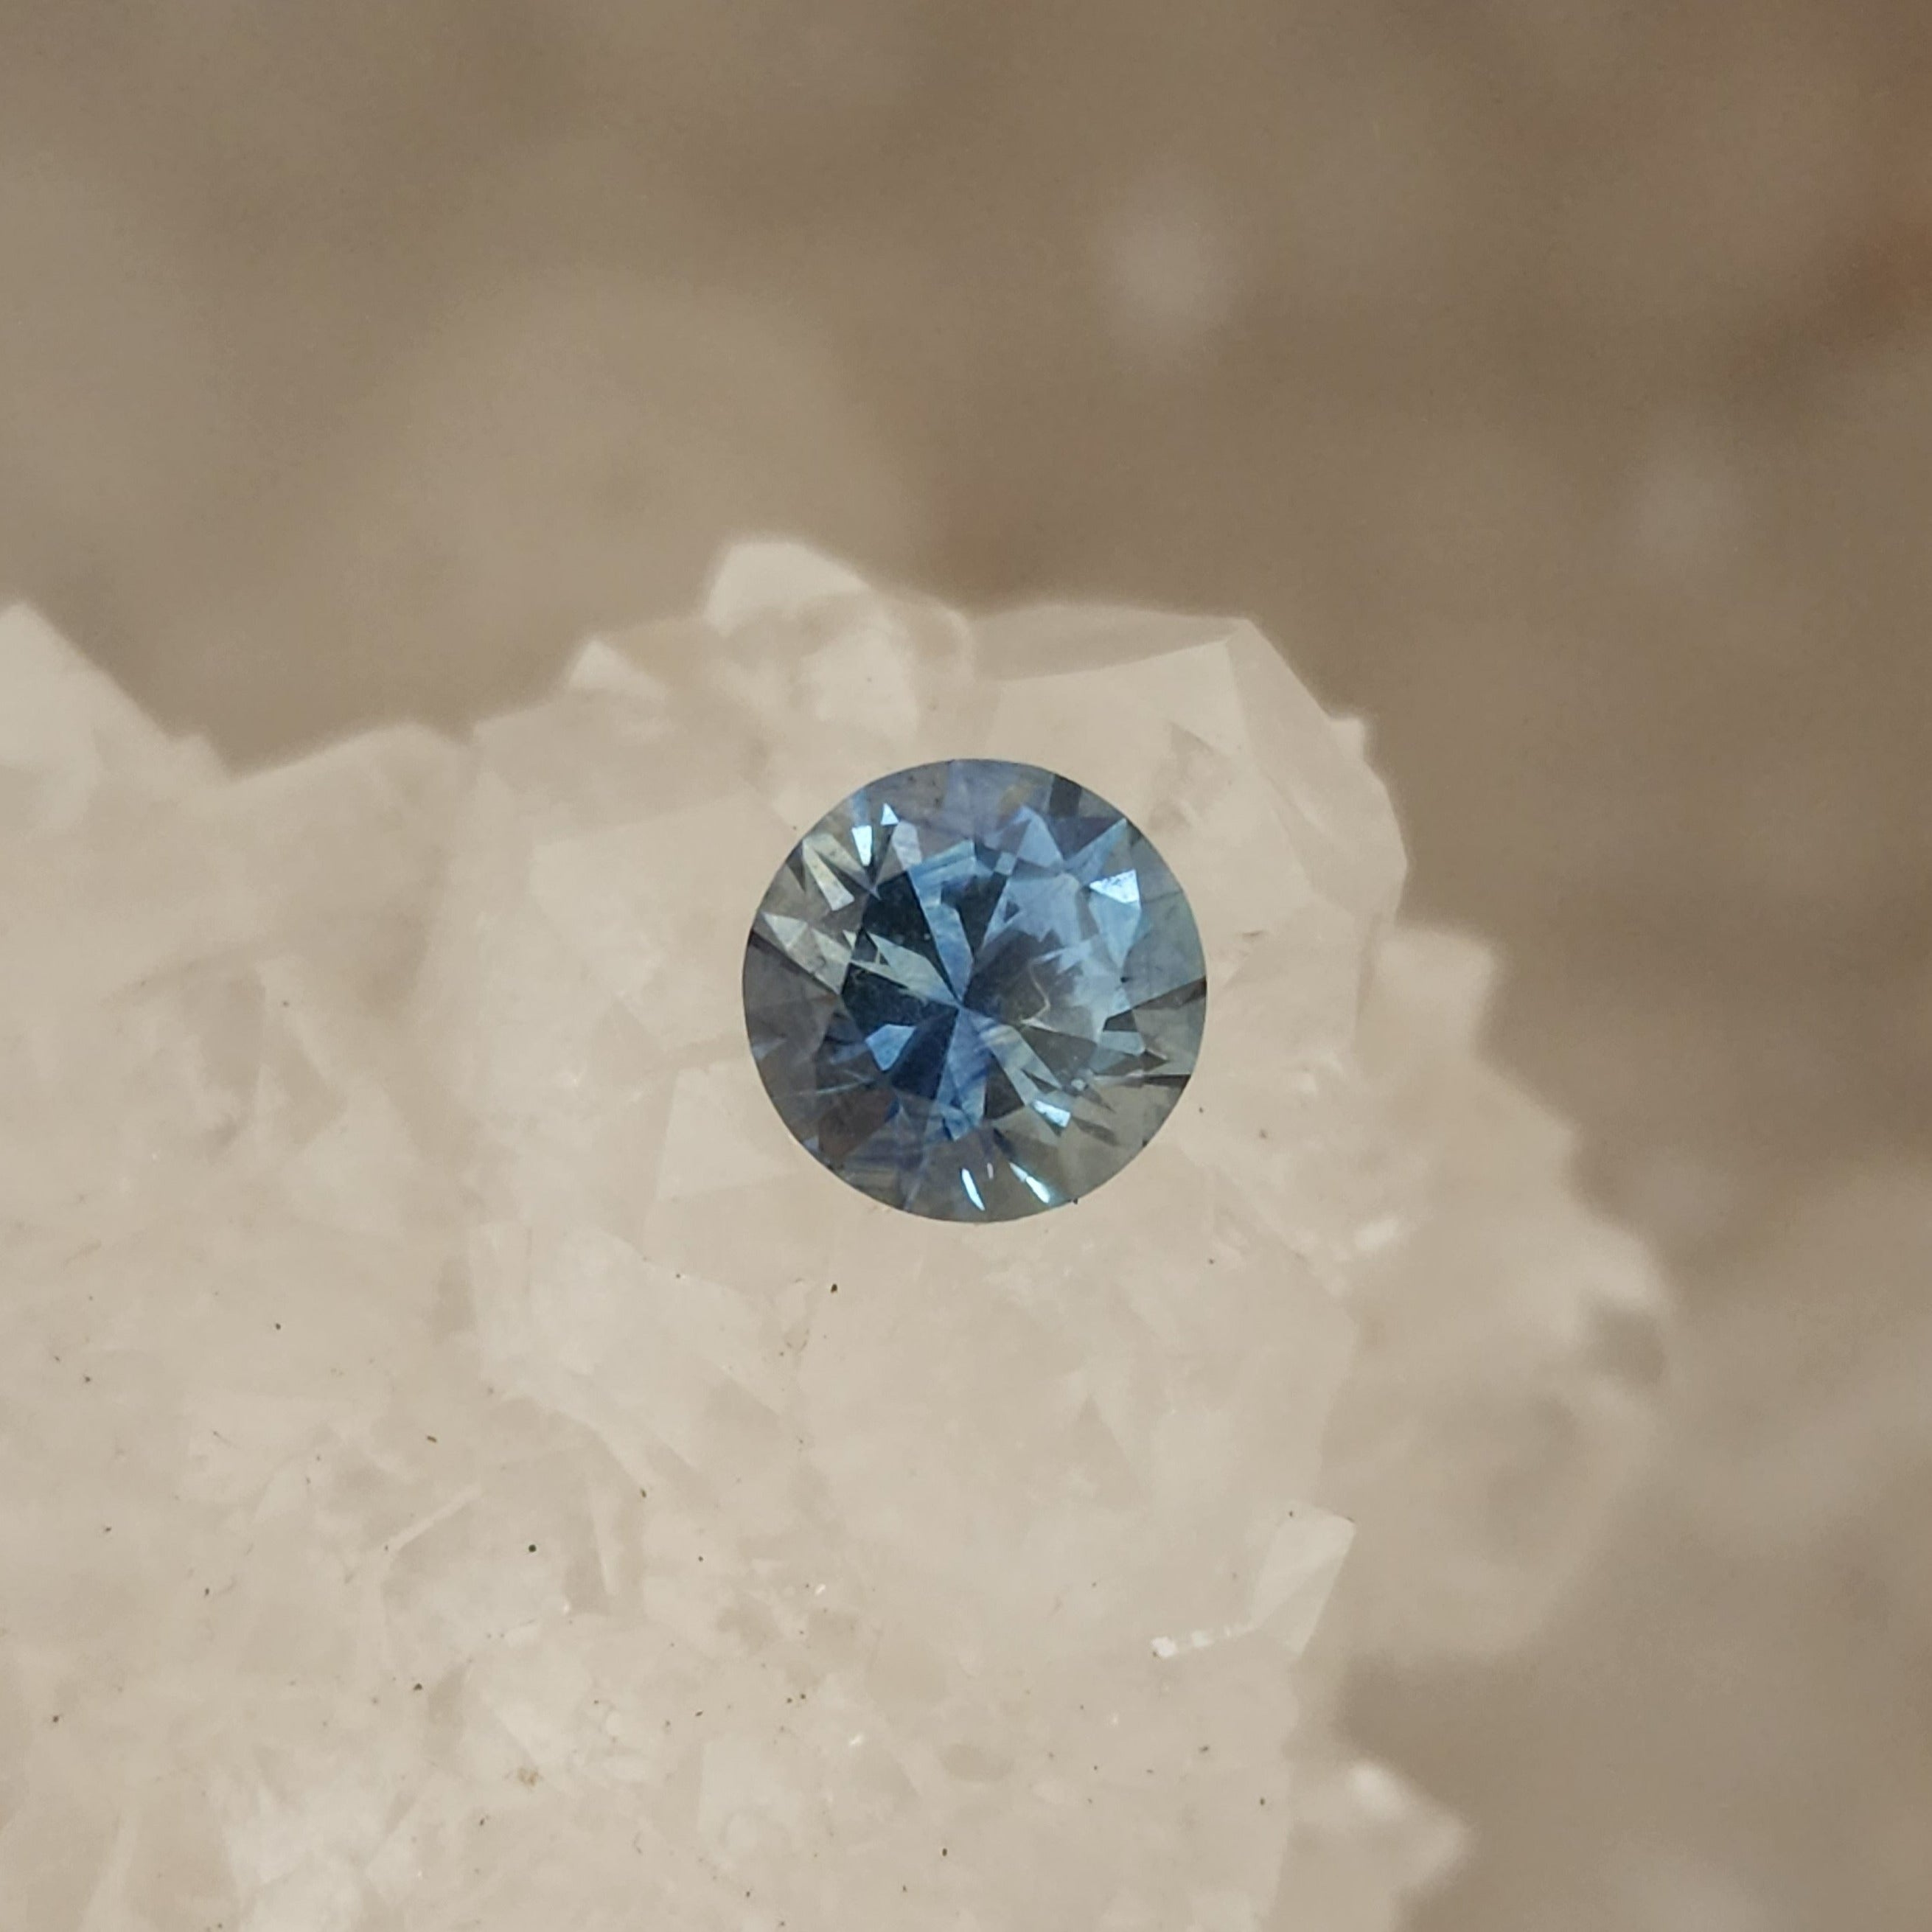 Montana Sapphire .91 CT Light to Medium Blue Round Cut